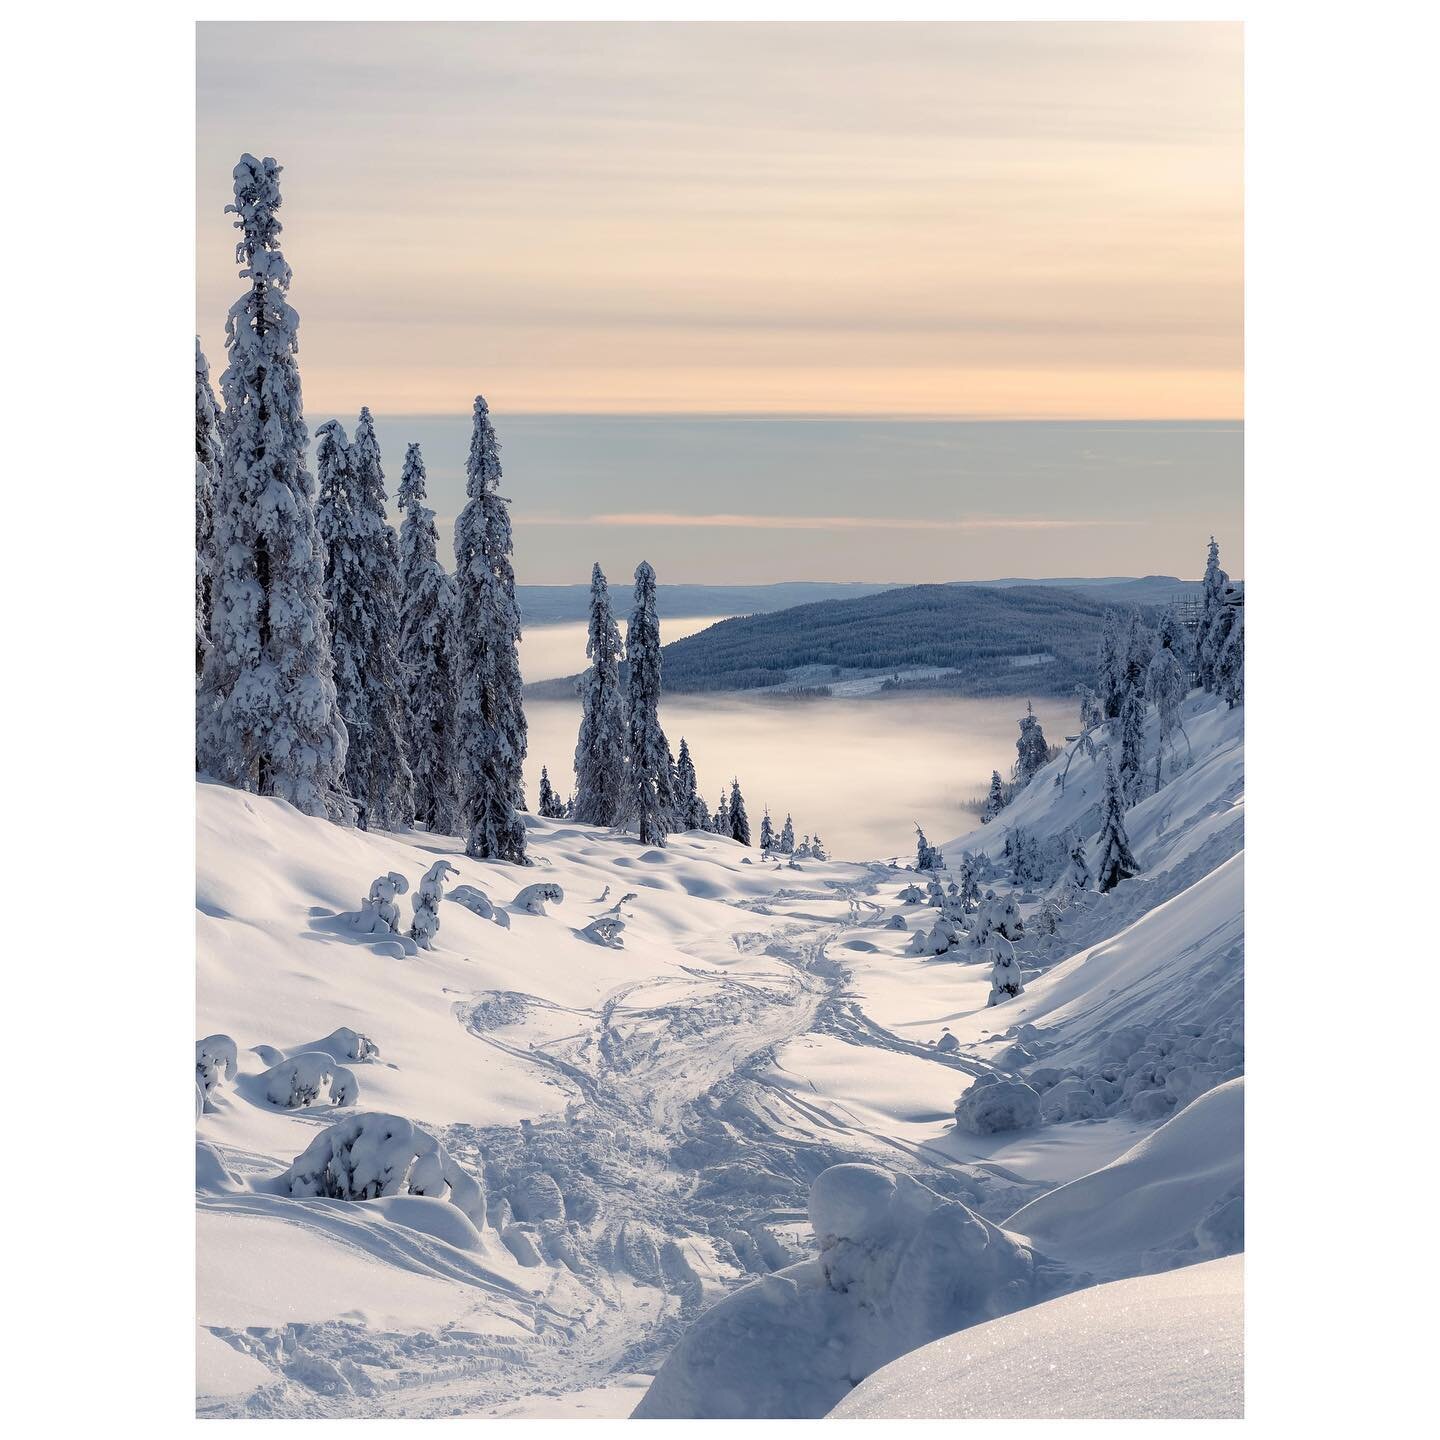 Off-piste

#shotoniphone #shotoniphone14promax #apple #offpiste #offpisteskiing #bran&auml;sberget #bran&auml;sskidort #visitv&auml;rmland #winterwonderland #landscapephotography #winterlandscape #snowpeak #visitsweden